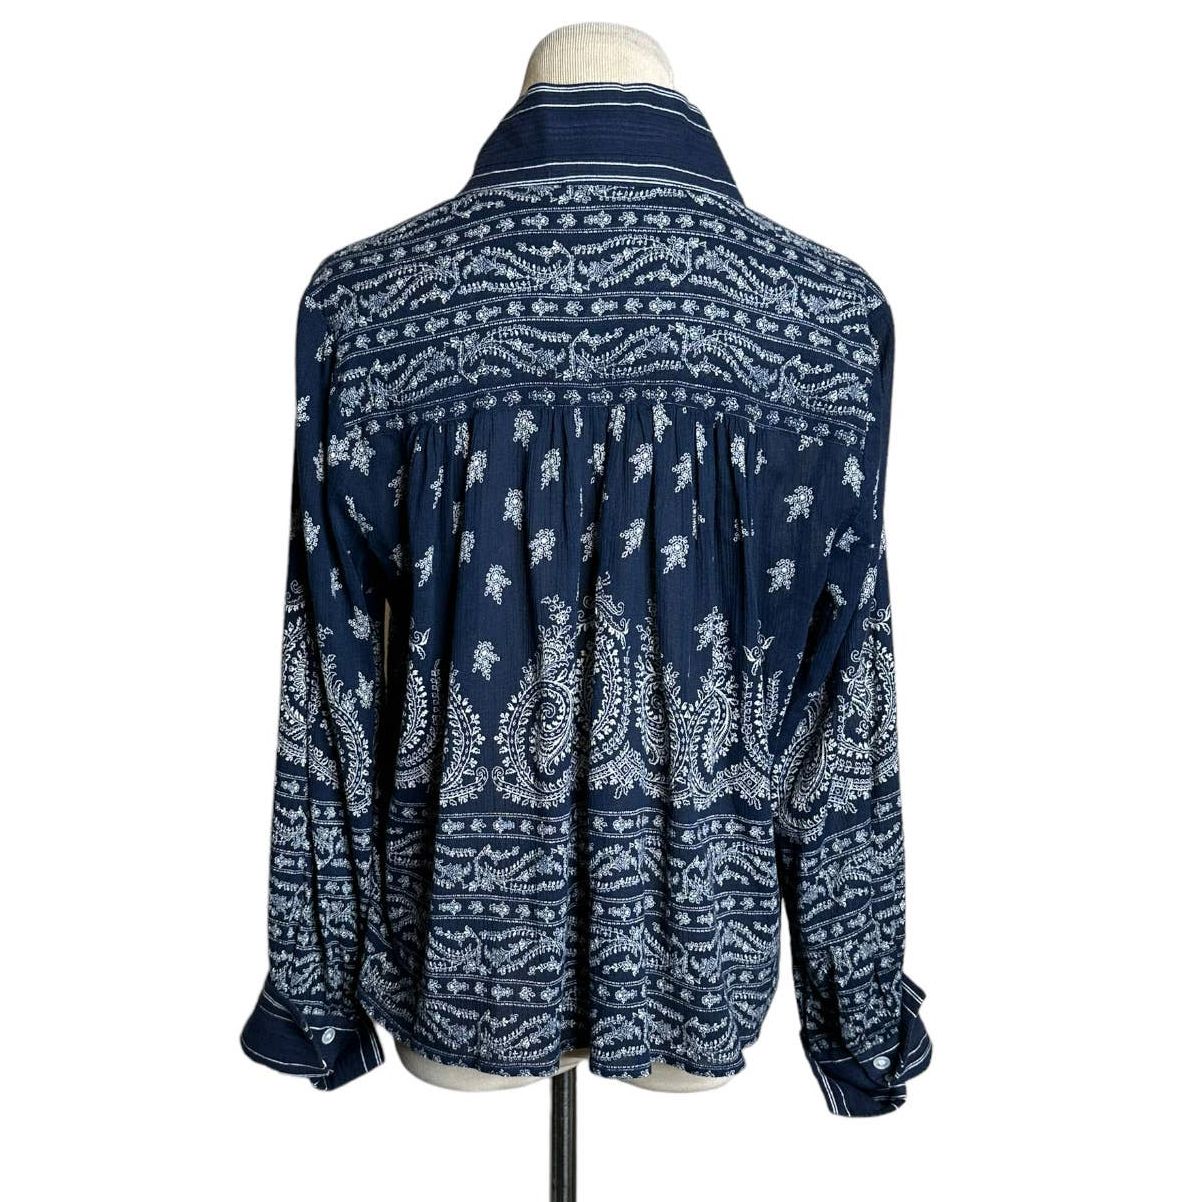 Sea New York Sea New York blue paisley print long sleeves blouse size 2 Size XS / US 0-2 / IT 36-38 - 3 Thumbnail